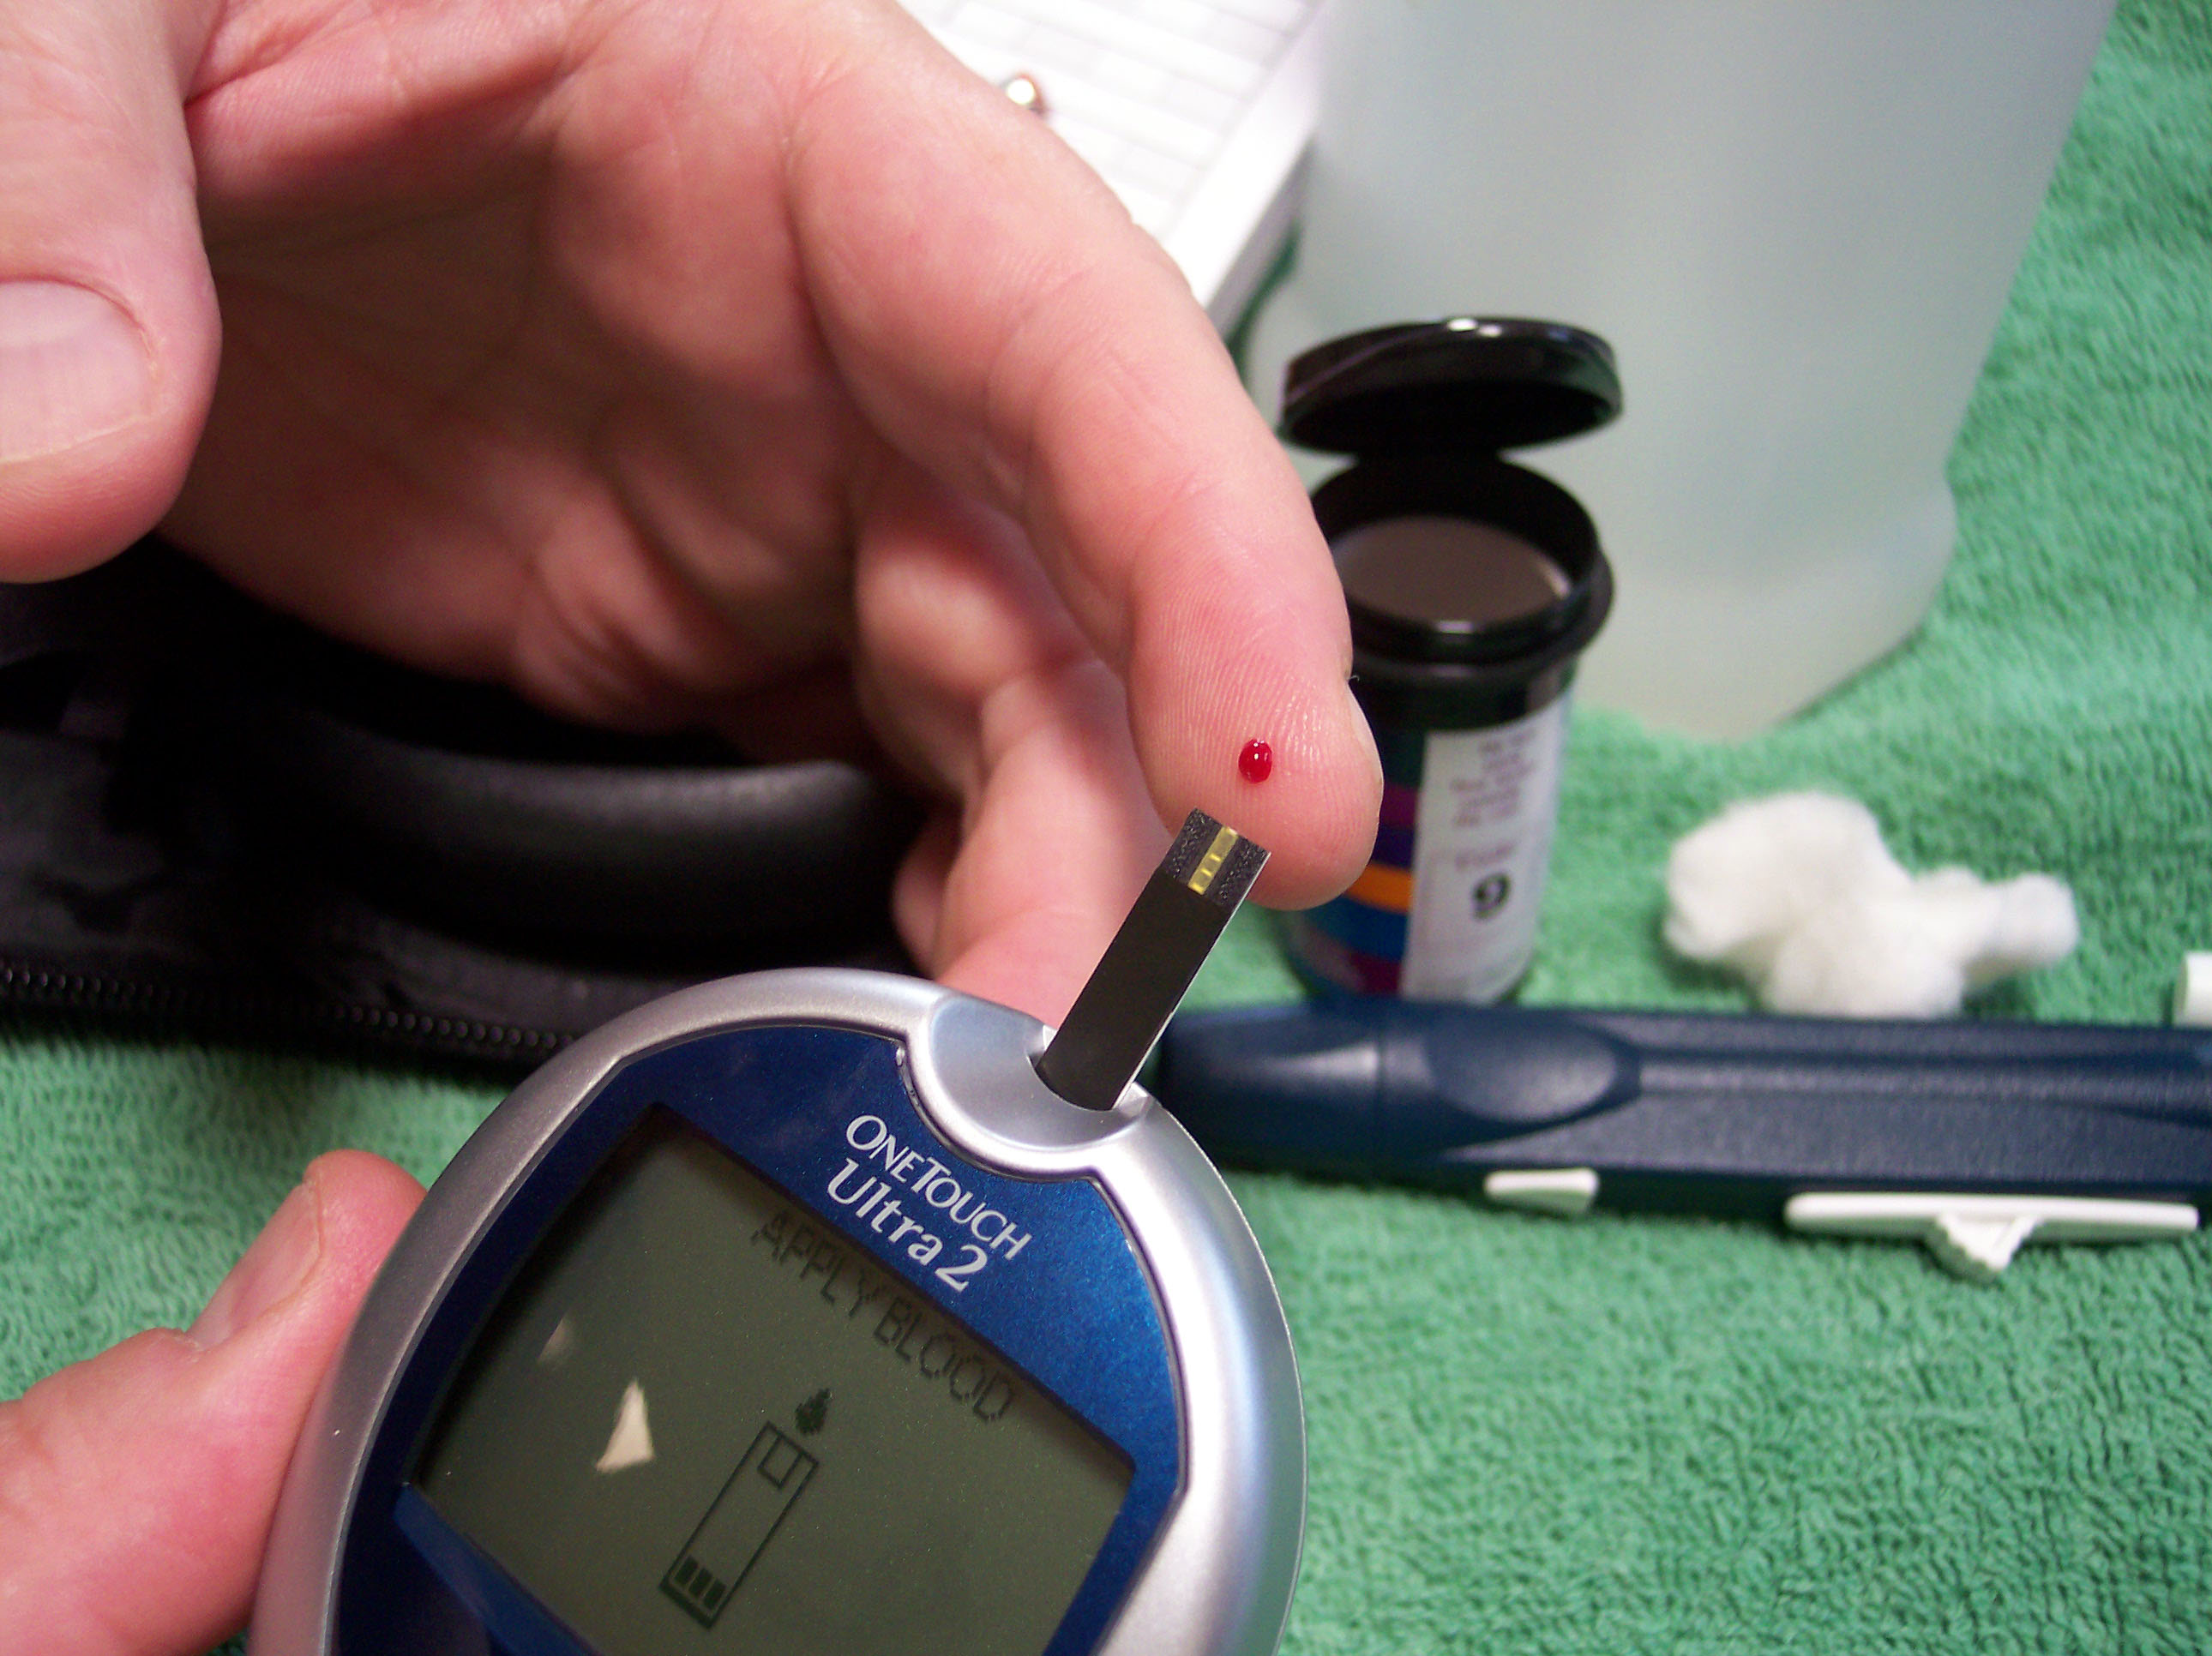 Empowering Diabetic Individuals: Reverse Diabetes through Self-Monitoring